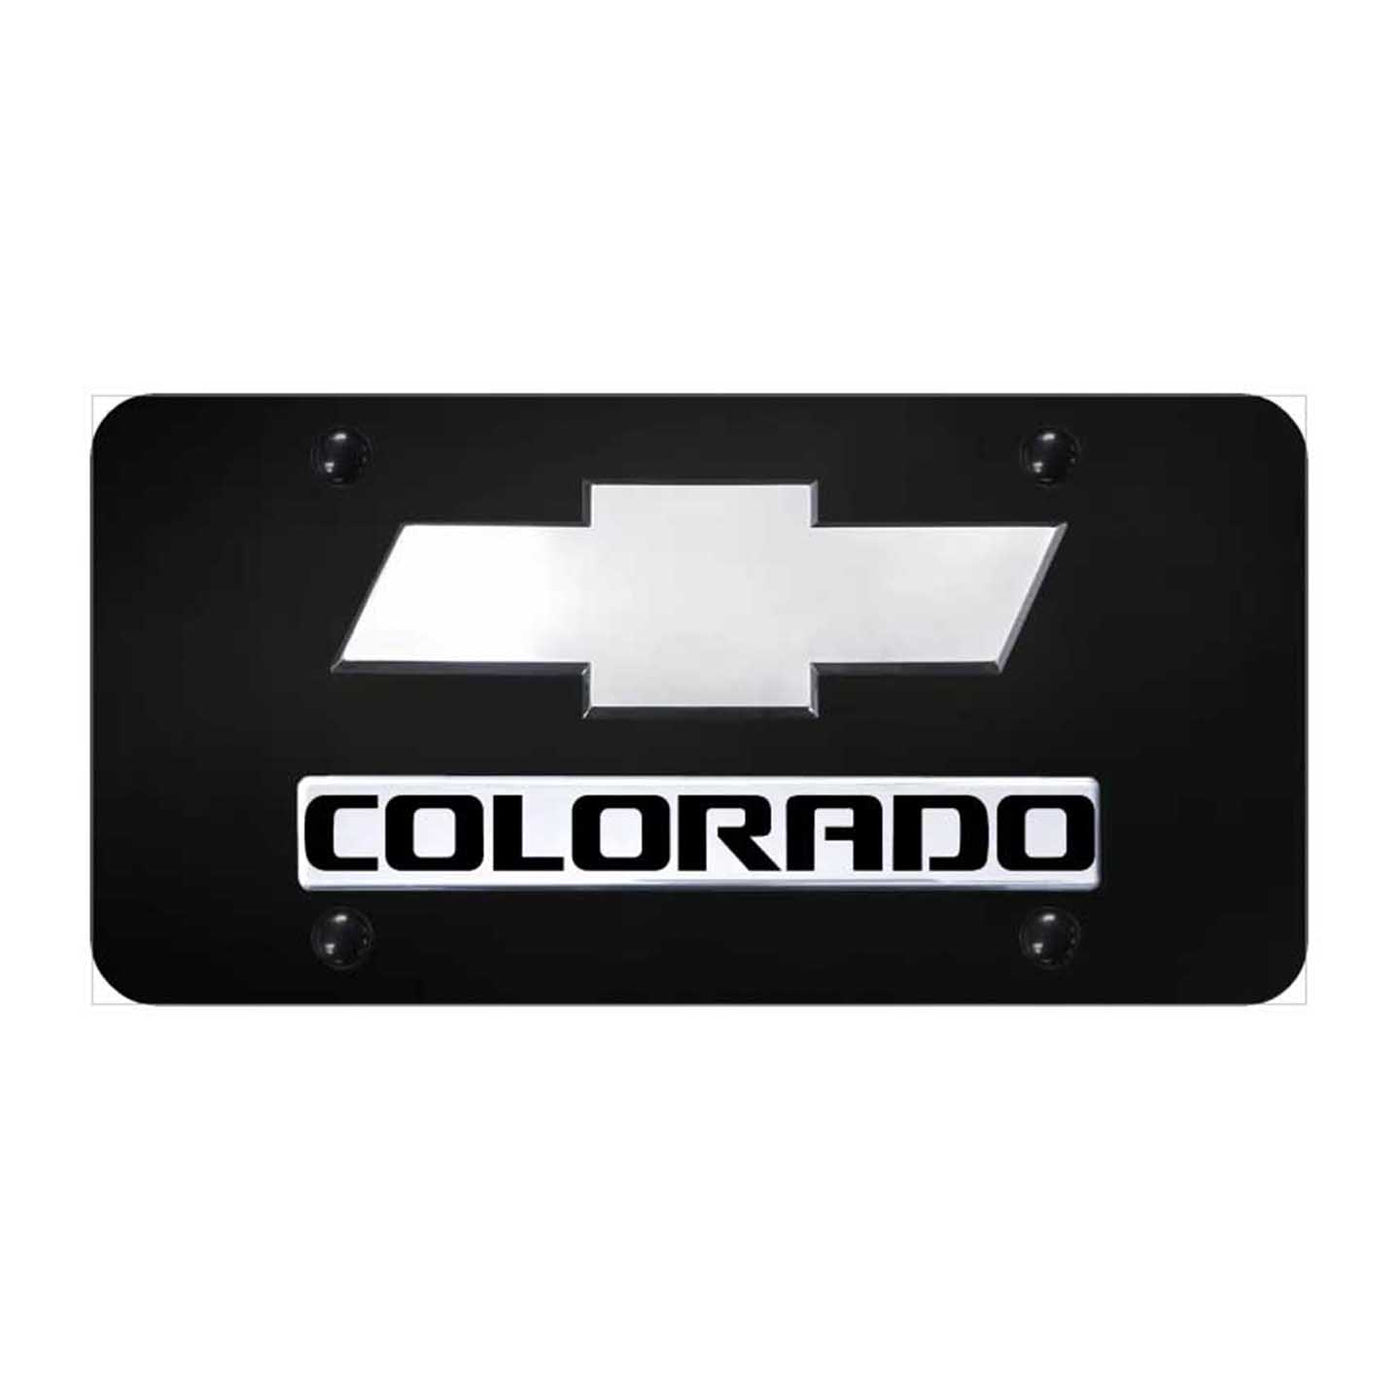 Dual Colorado (New) License Plate - Chrome on Black